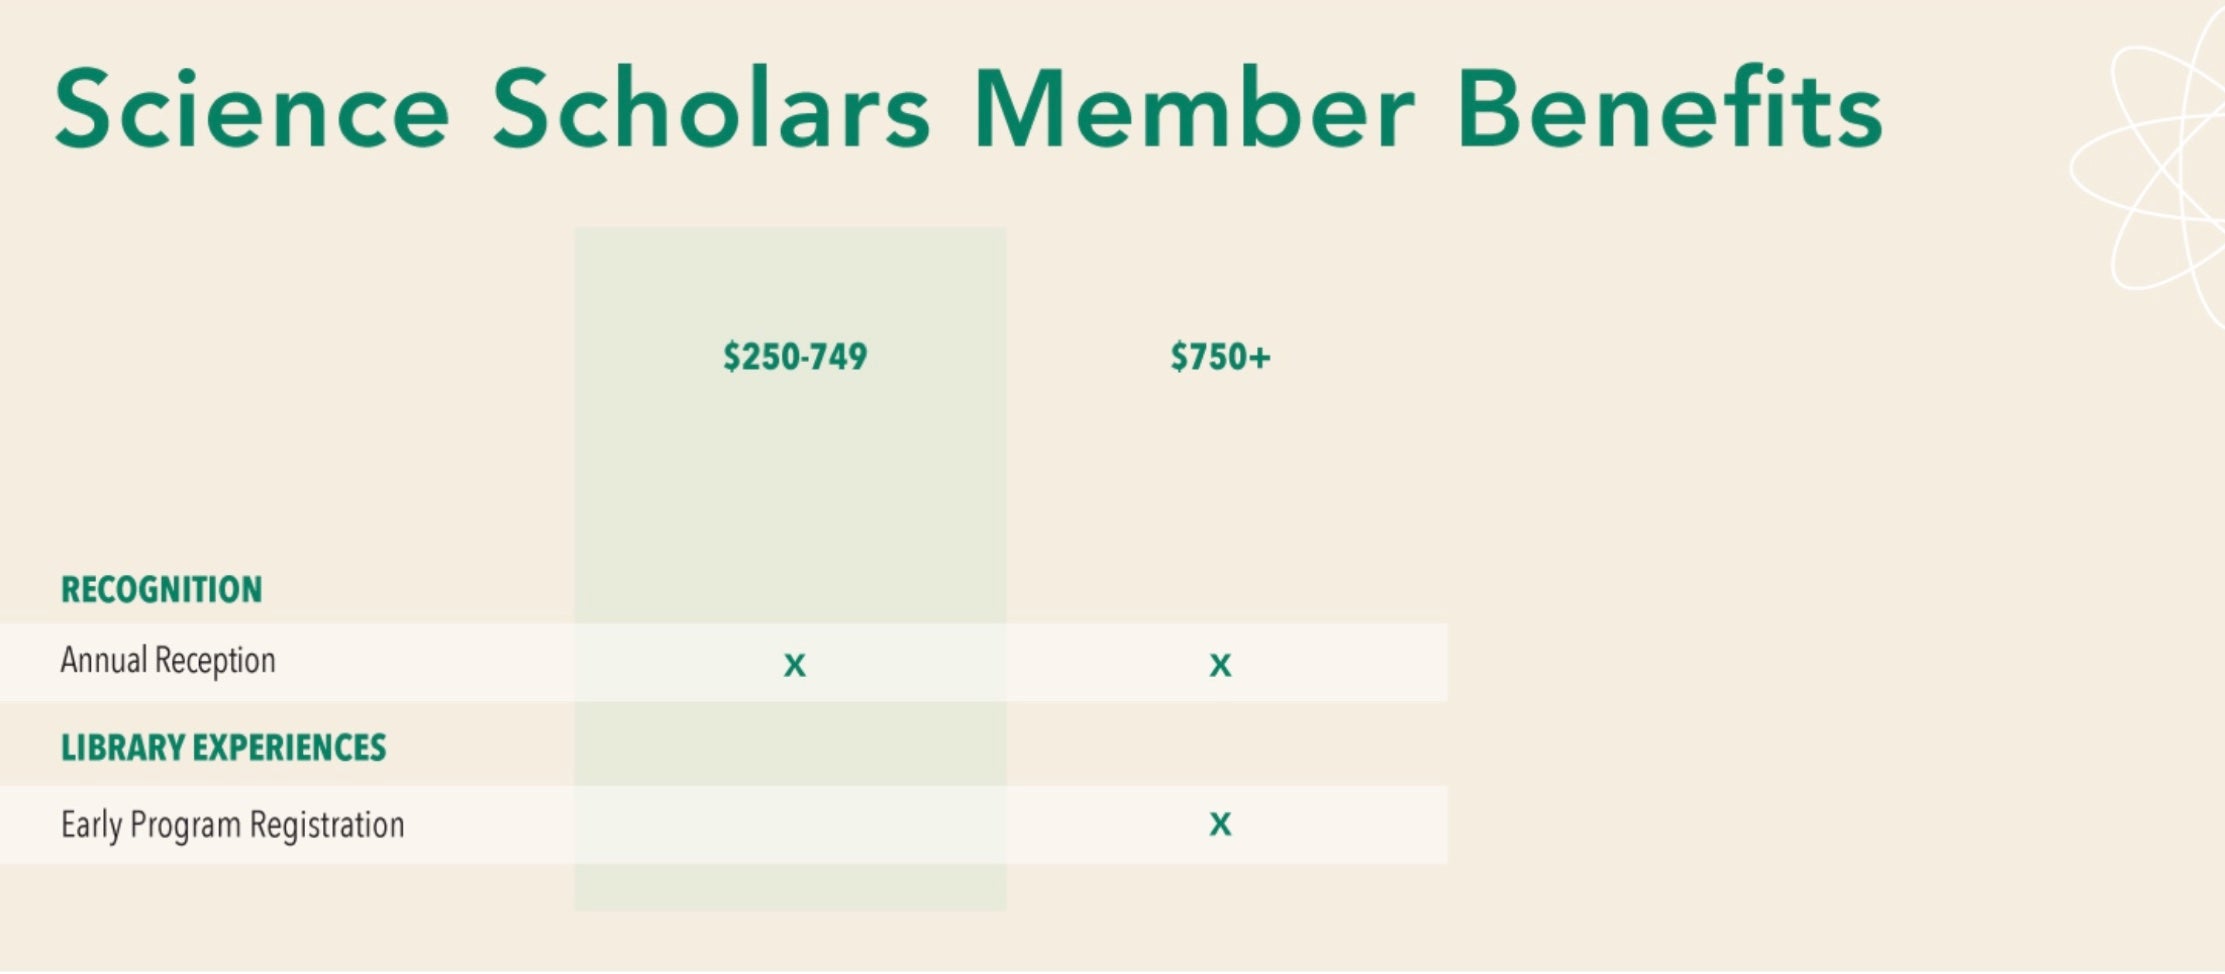 Science Scholars Member Benefits table